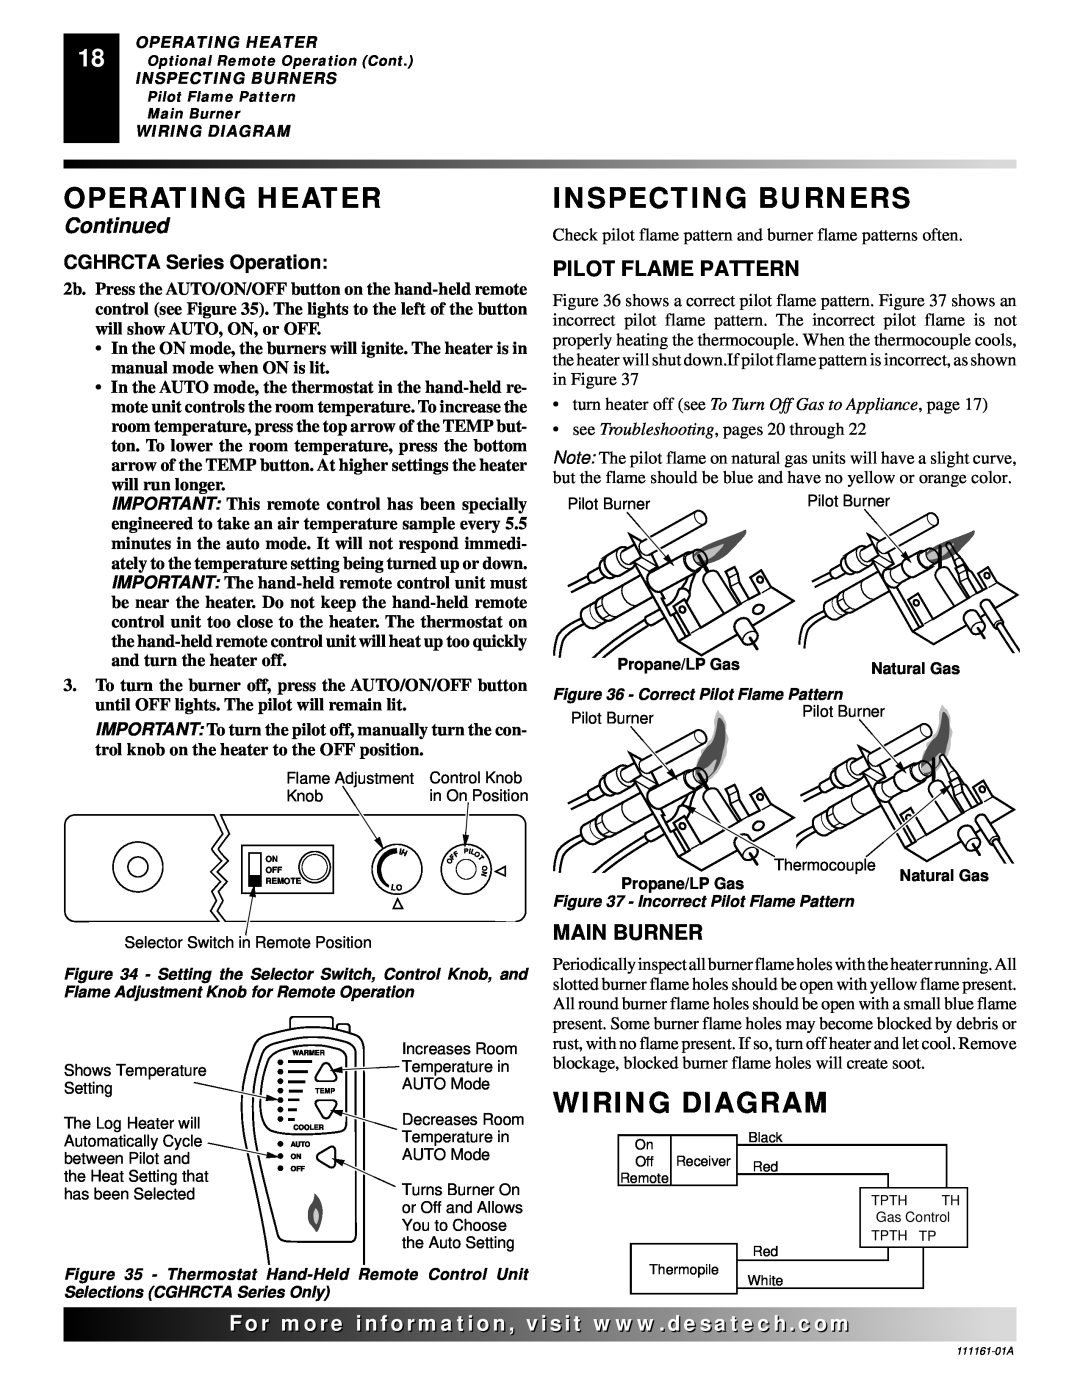 Desa CCL3018PRA Inspecting Burners, Wiring Diagram, Pilot Flame Pattern, Main Burner, CGHRCTA Series Operation, Continued 